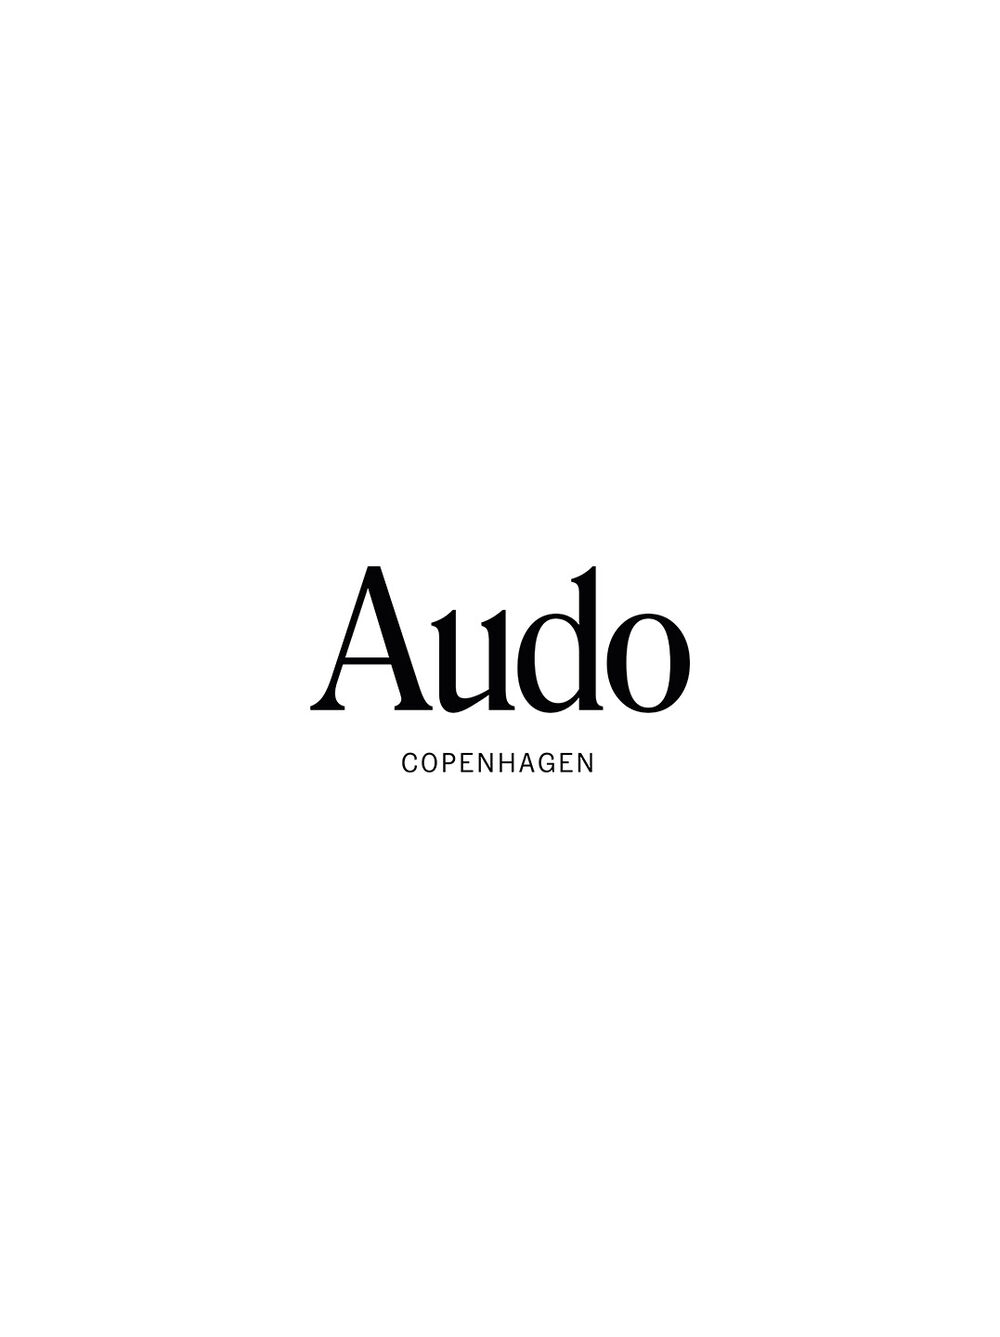 Audo Copehangen _ logo _ FlosB&BItaliaGroup